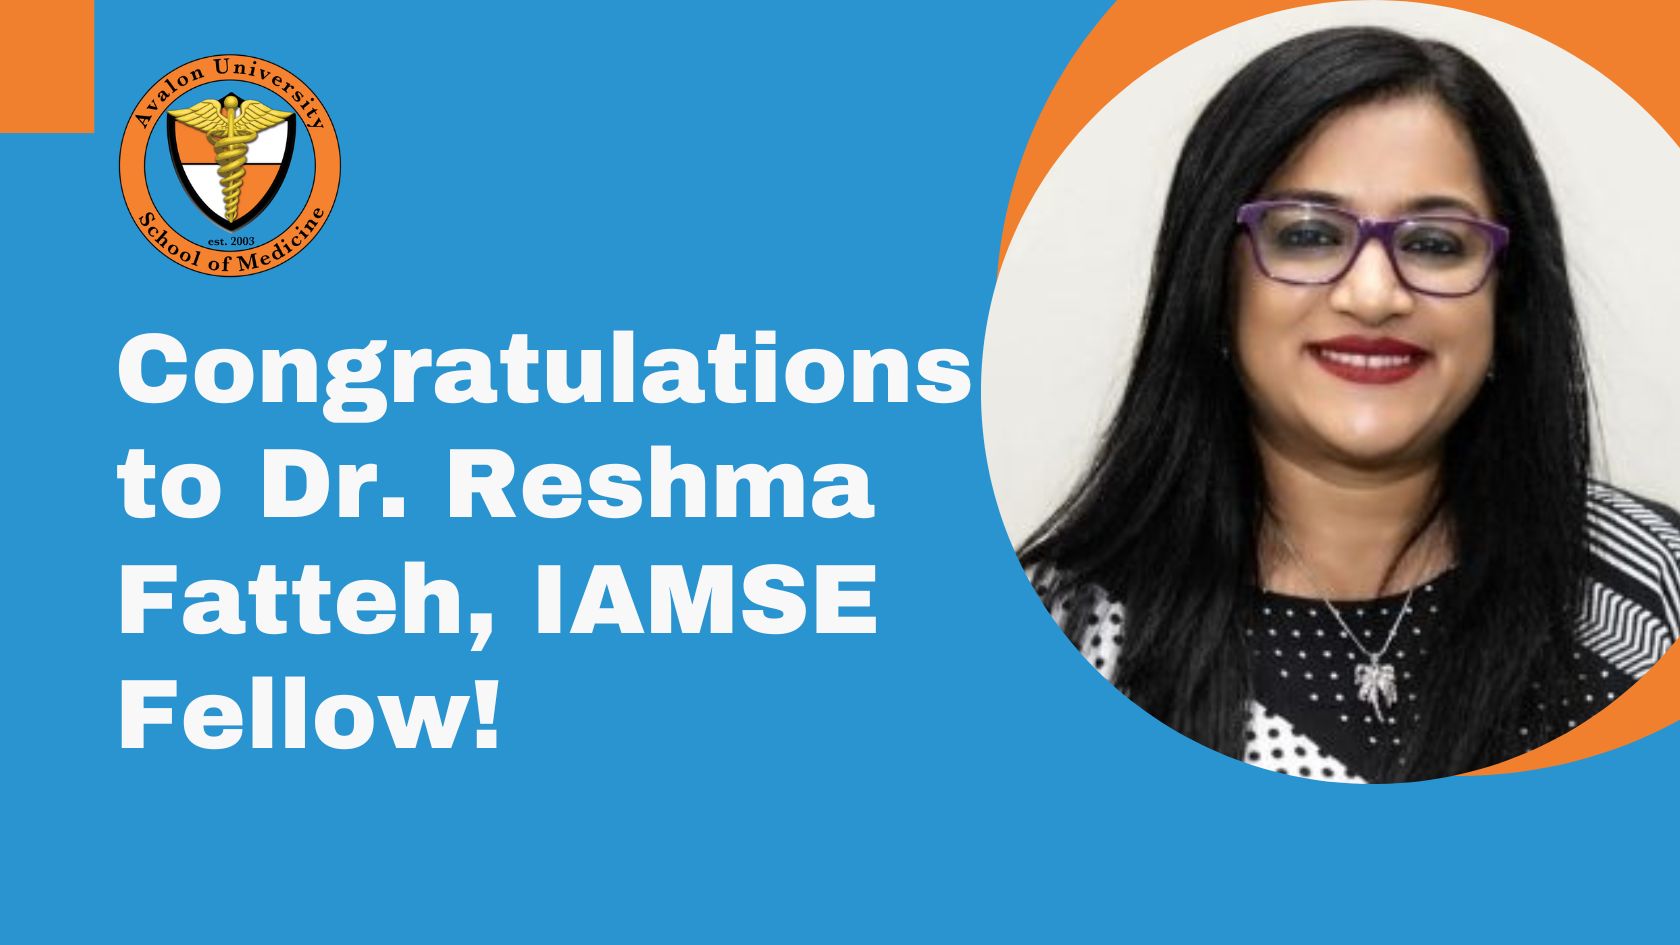 IAMSE Fellowship Dr. Reshma Fatteh